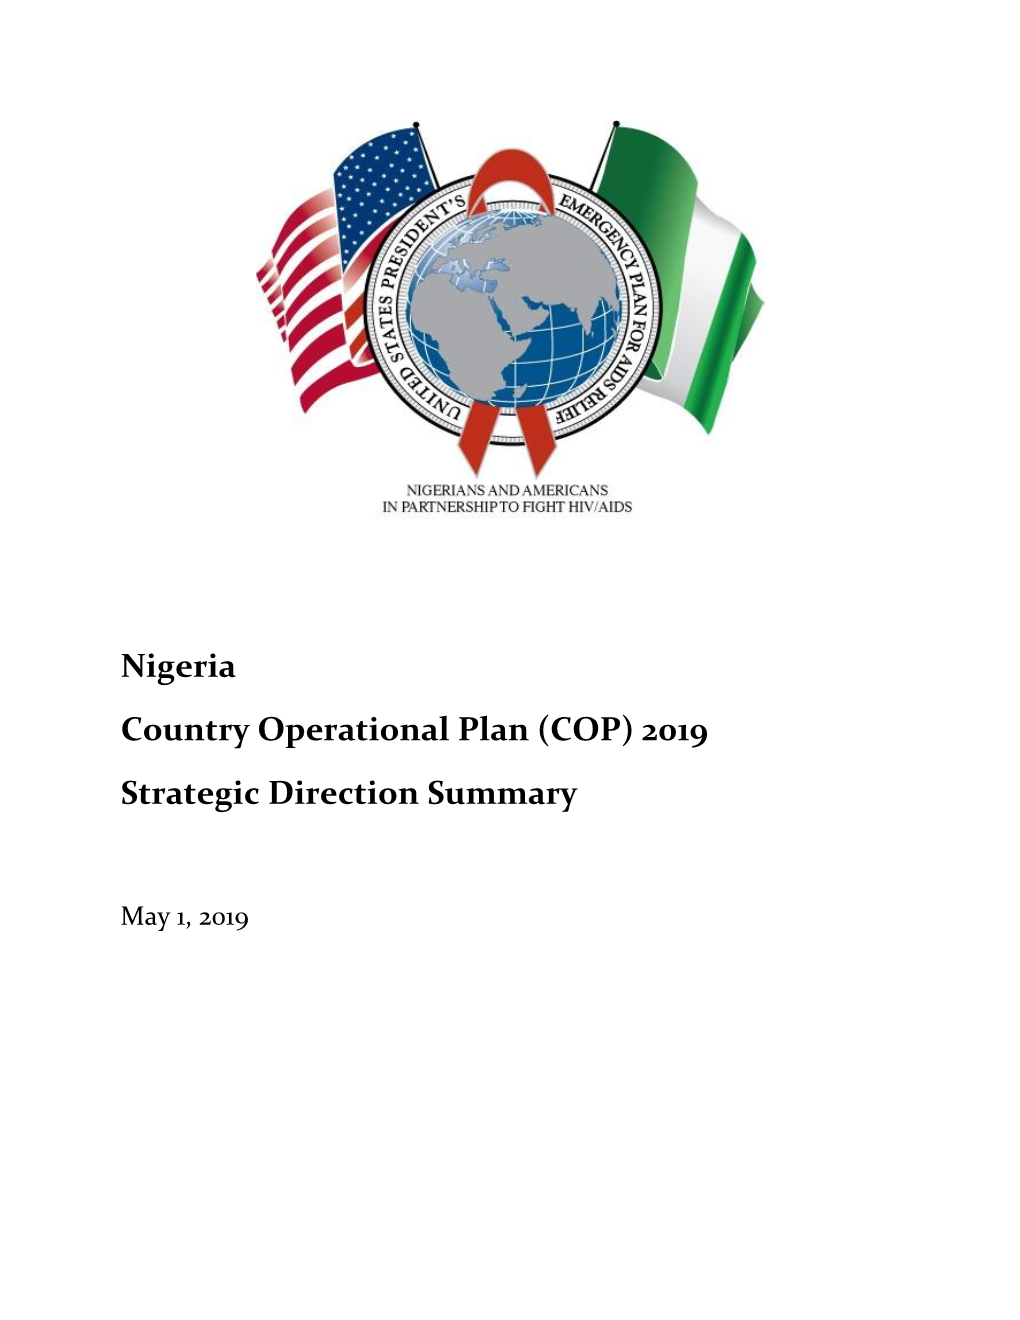 Nigeria Country Operational Plan (COP) 2019 Strategic Direction Summary